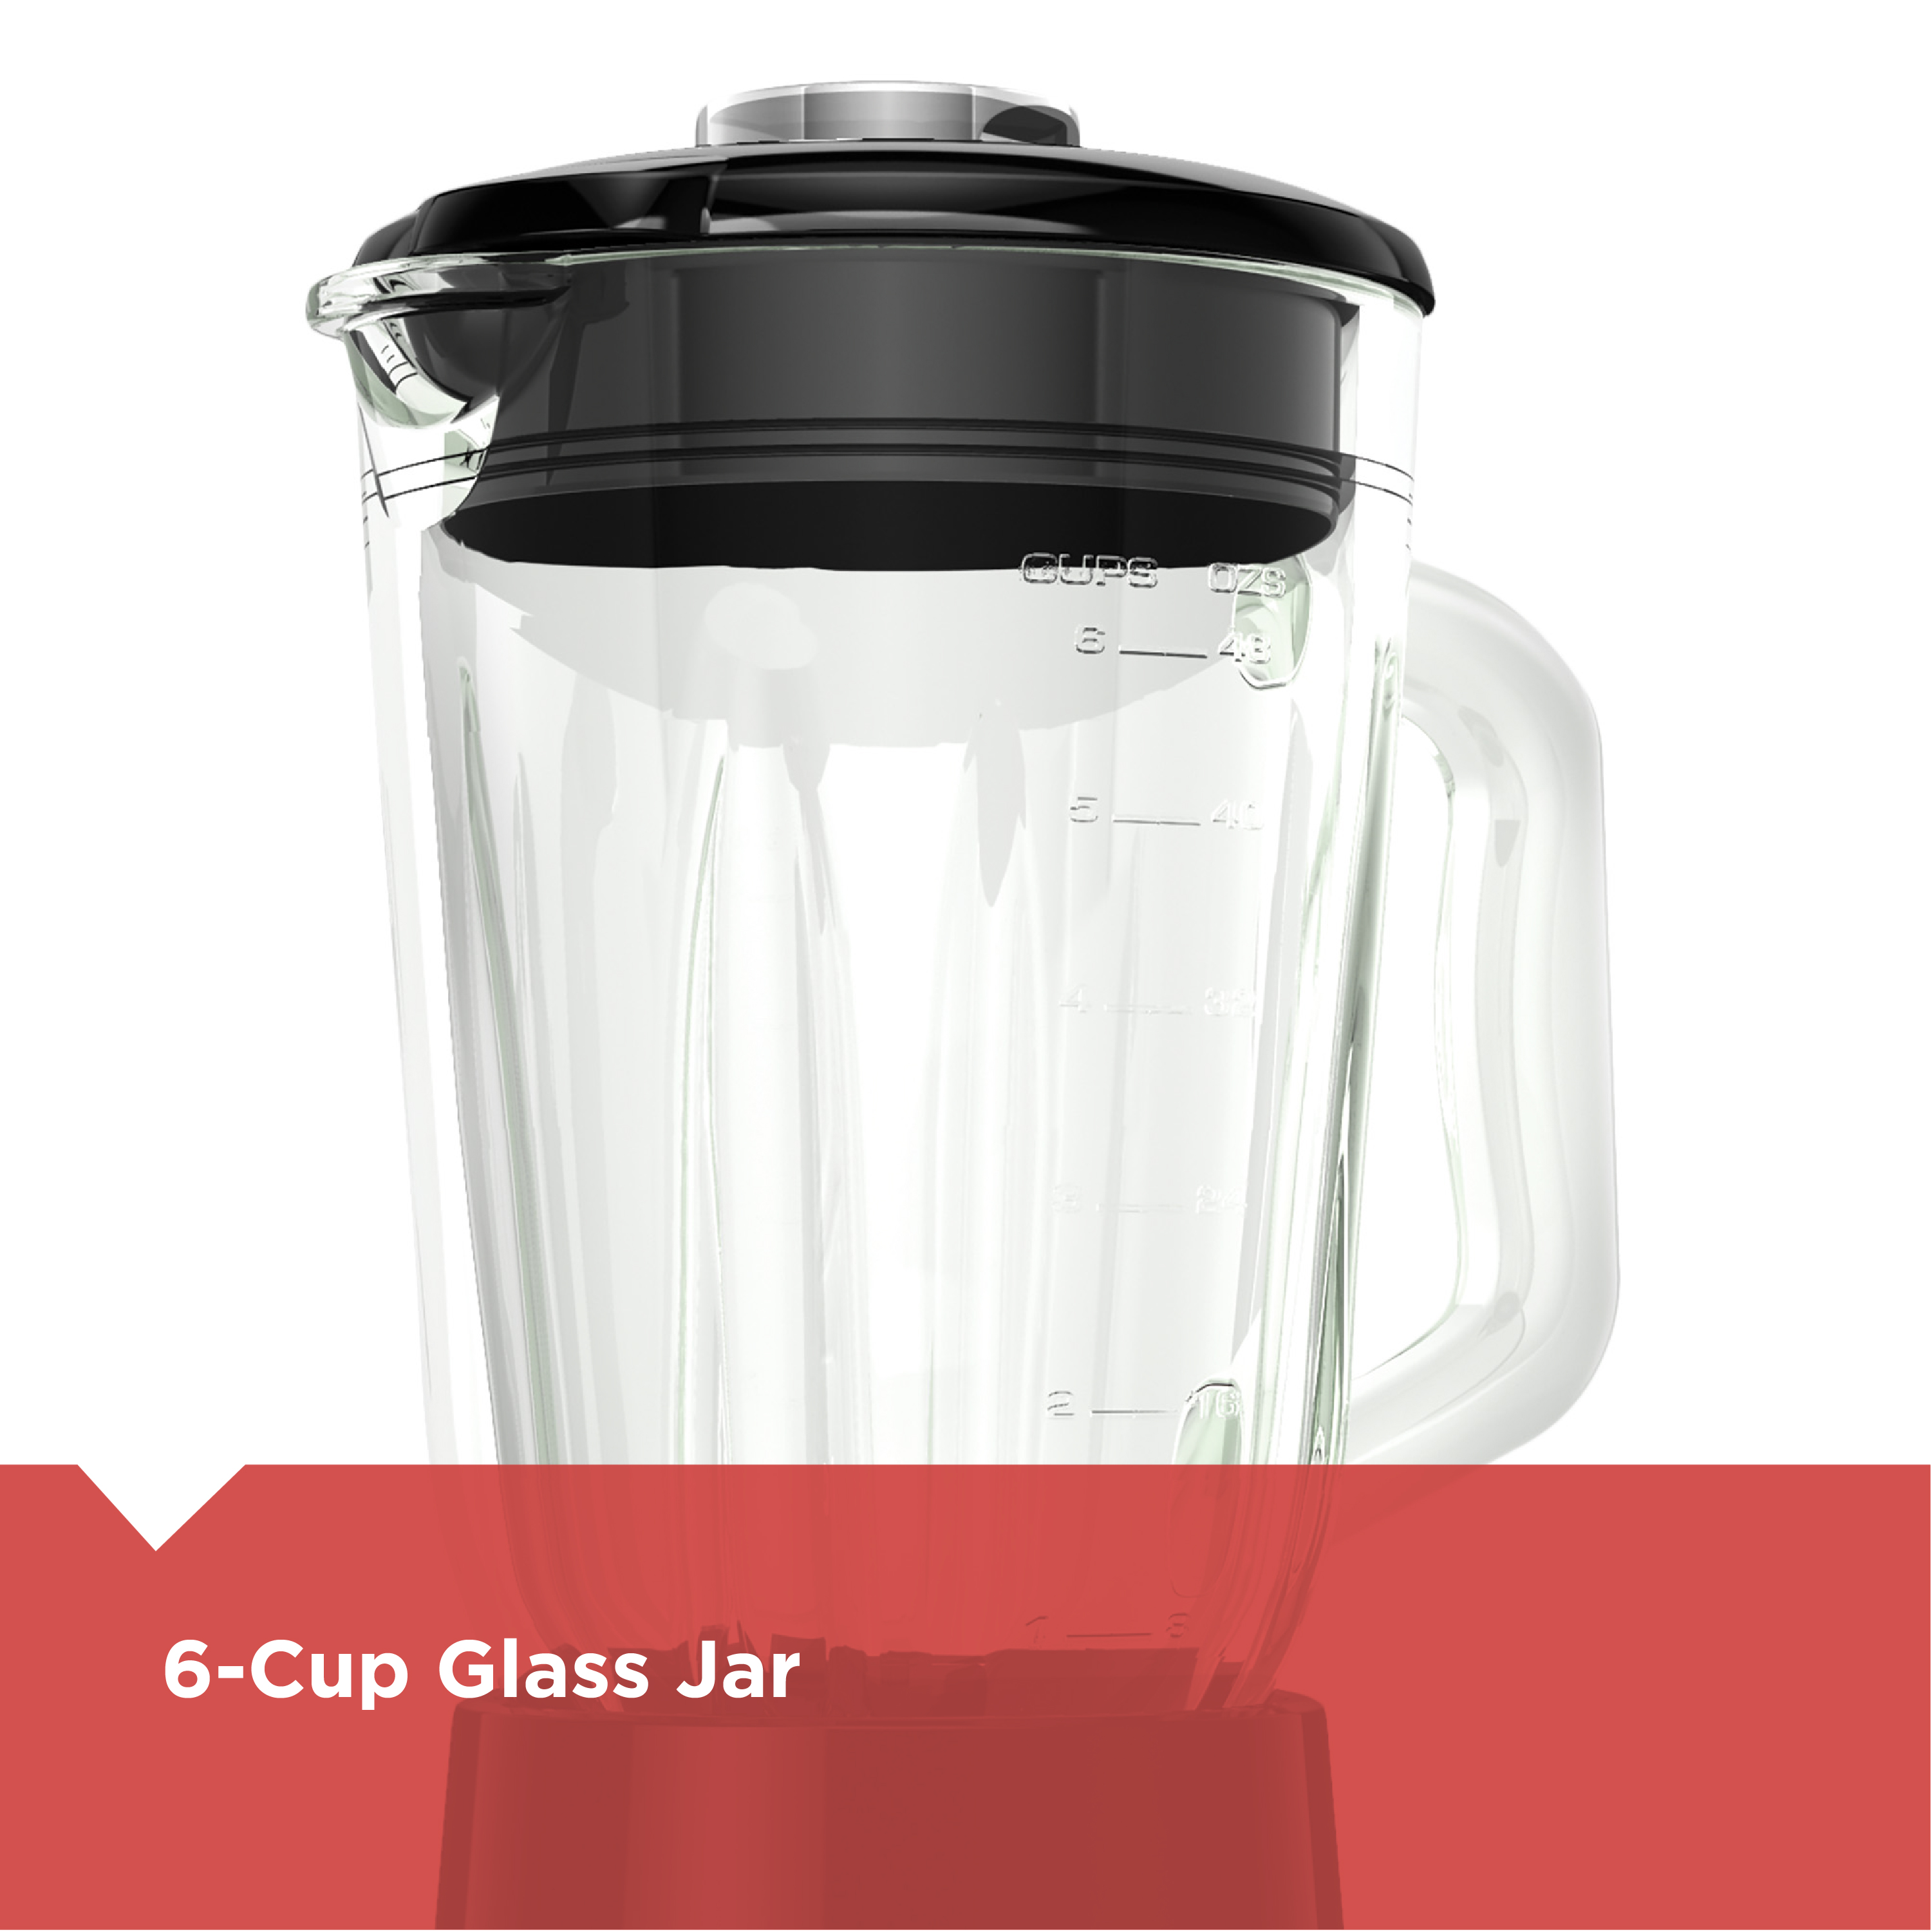 BLACK+DECKER Blender with 6-Cup Glass Jar, Red, BL1110RG - image 4 of 6